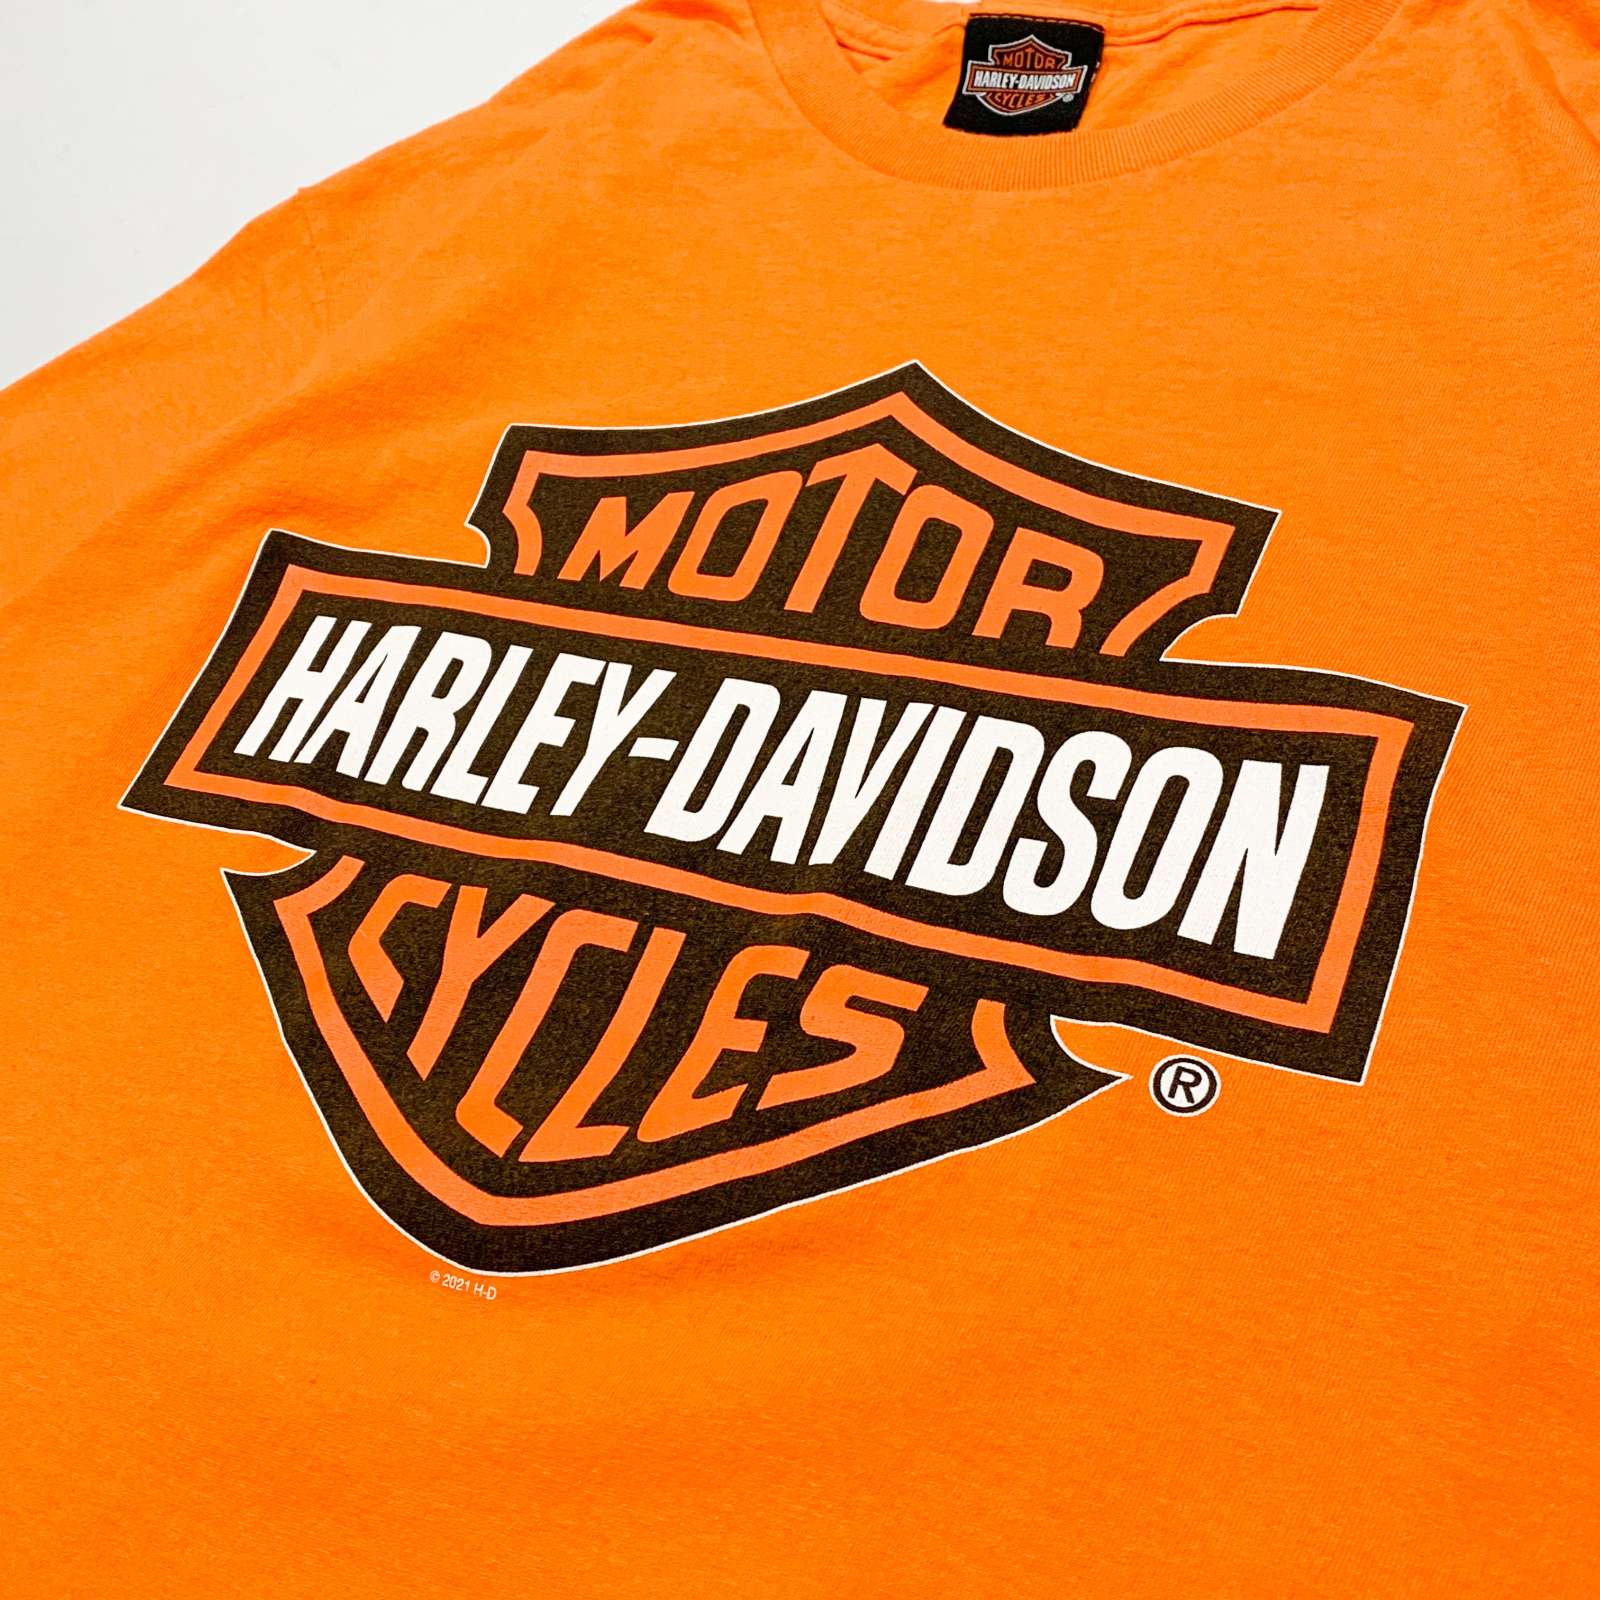 HARLEY DAVIDSON 両面ロゴプリント Tシャツ(オレンジ)